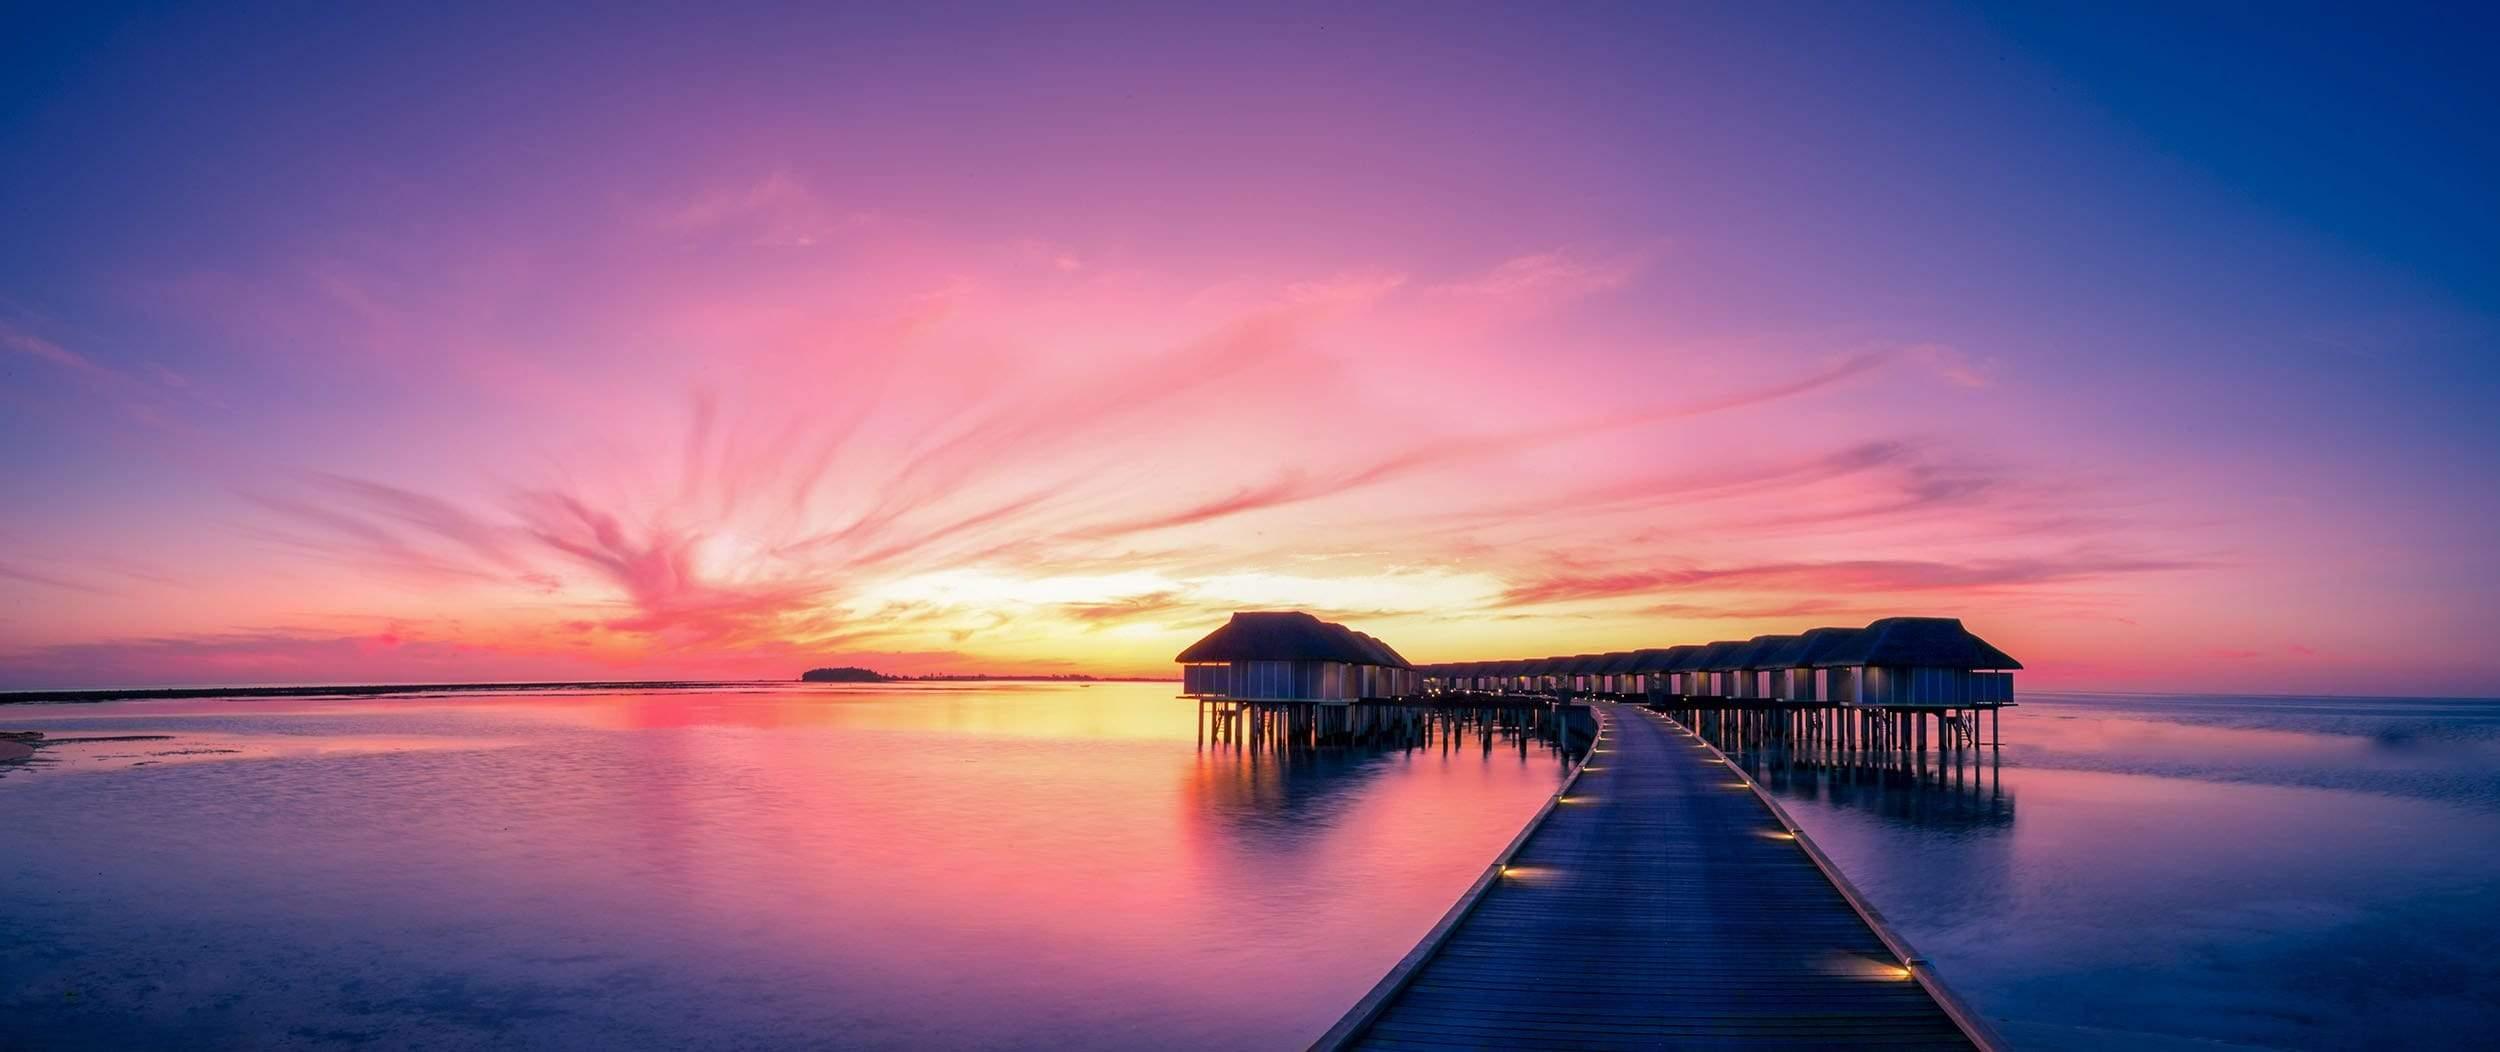 Sunset on Maldives island water villas resort along wooden pier